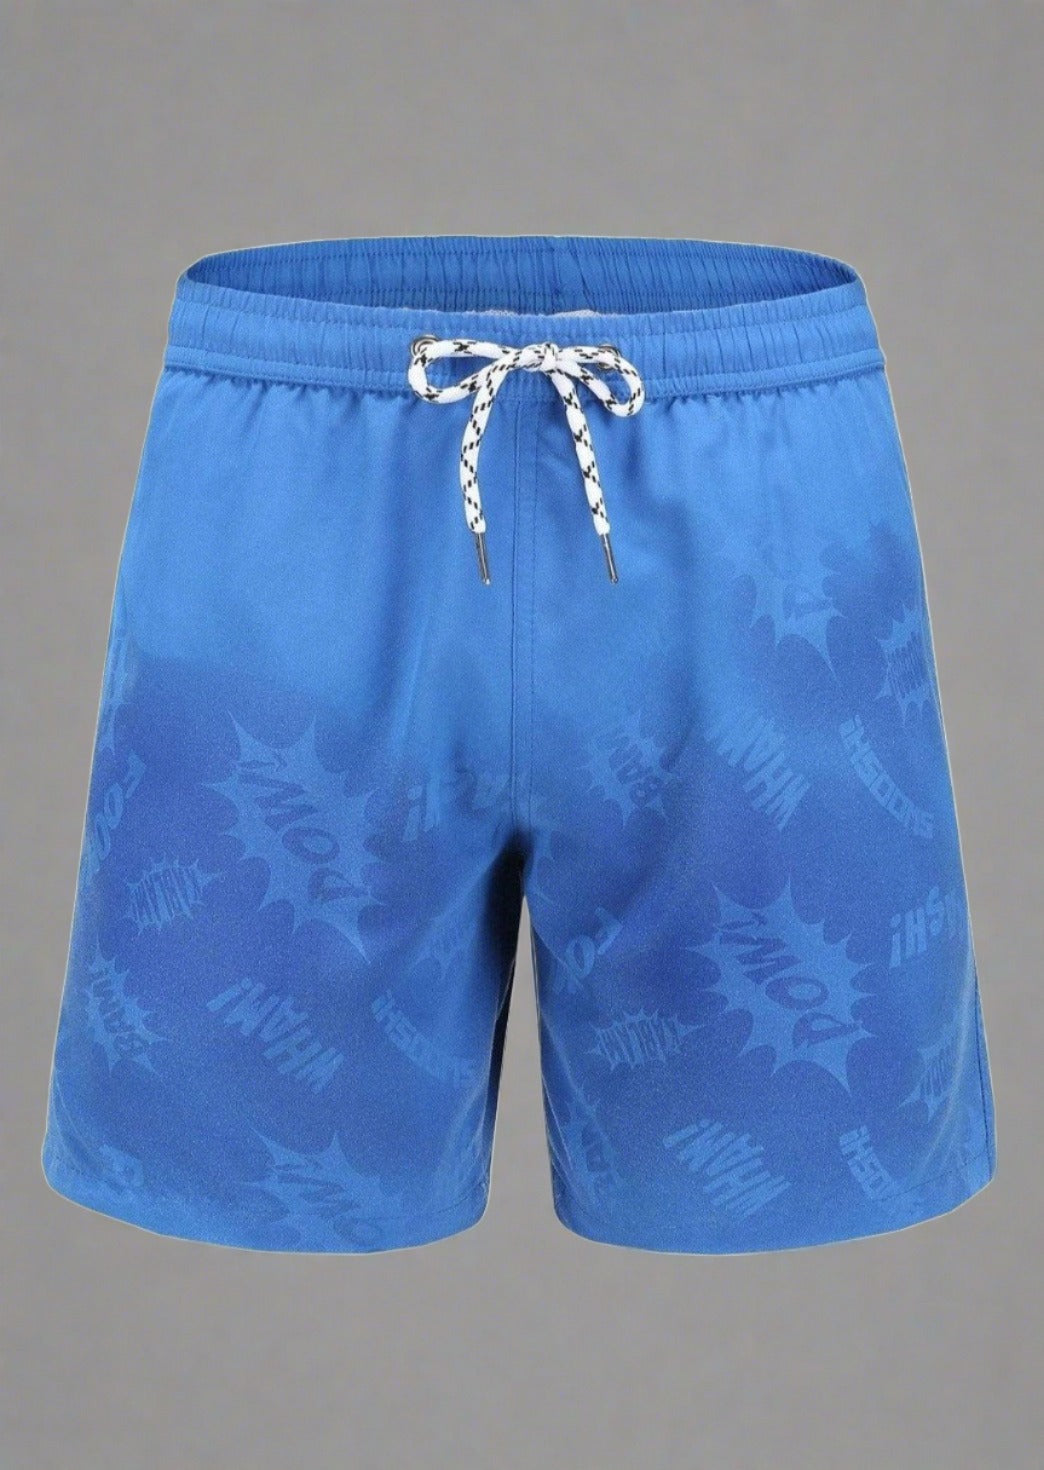 Color Change Magic Print Beach Swim Shorts - Trendociti